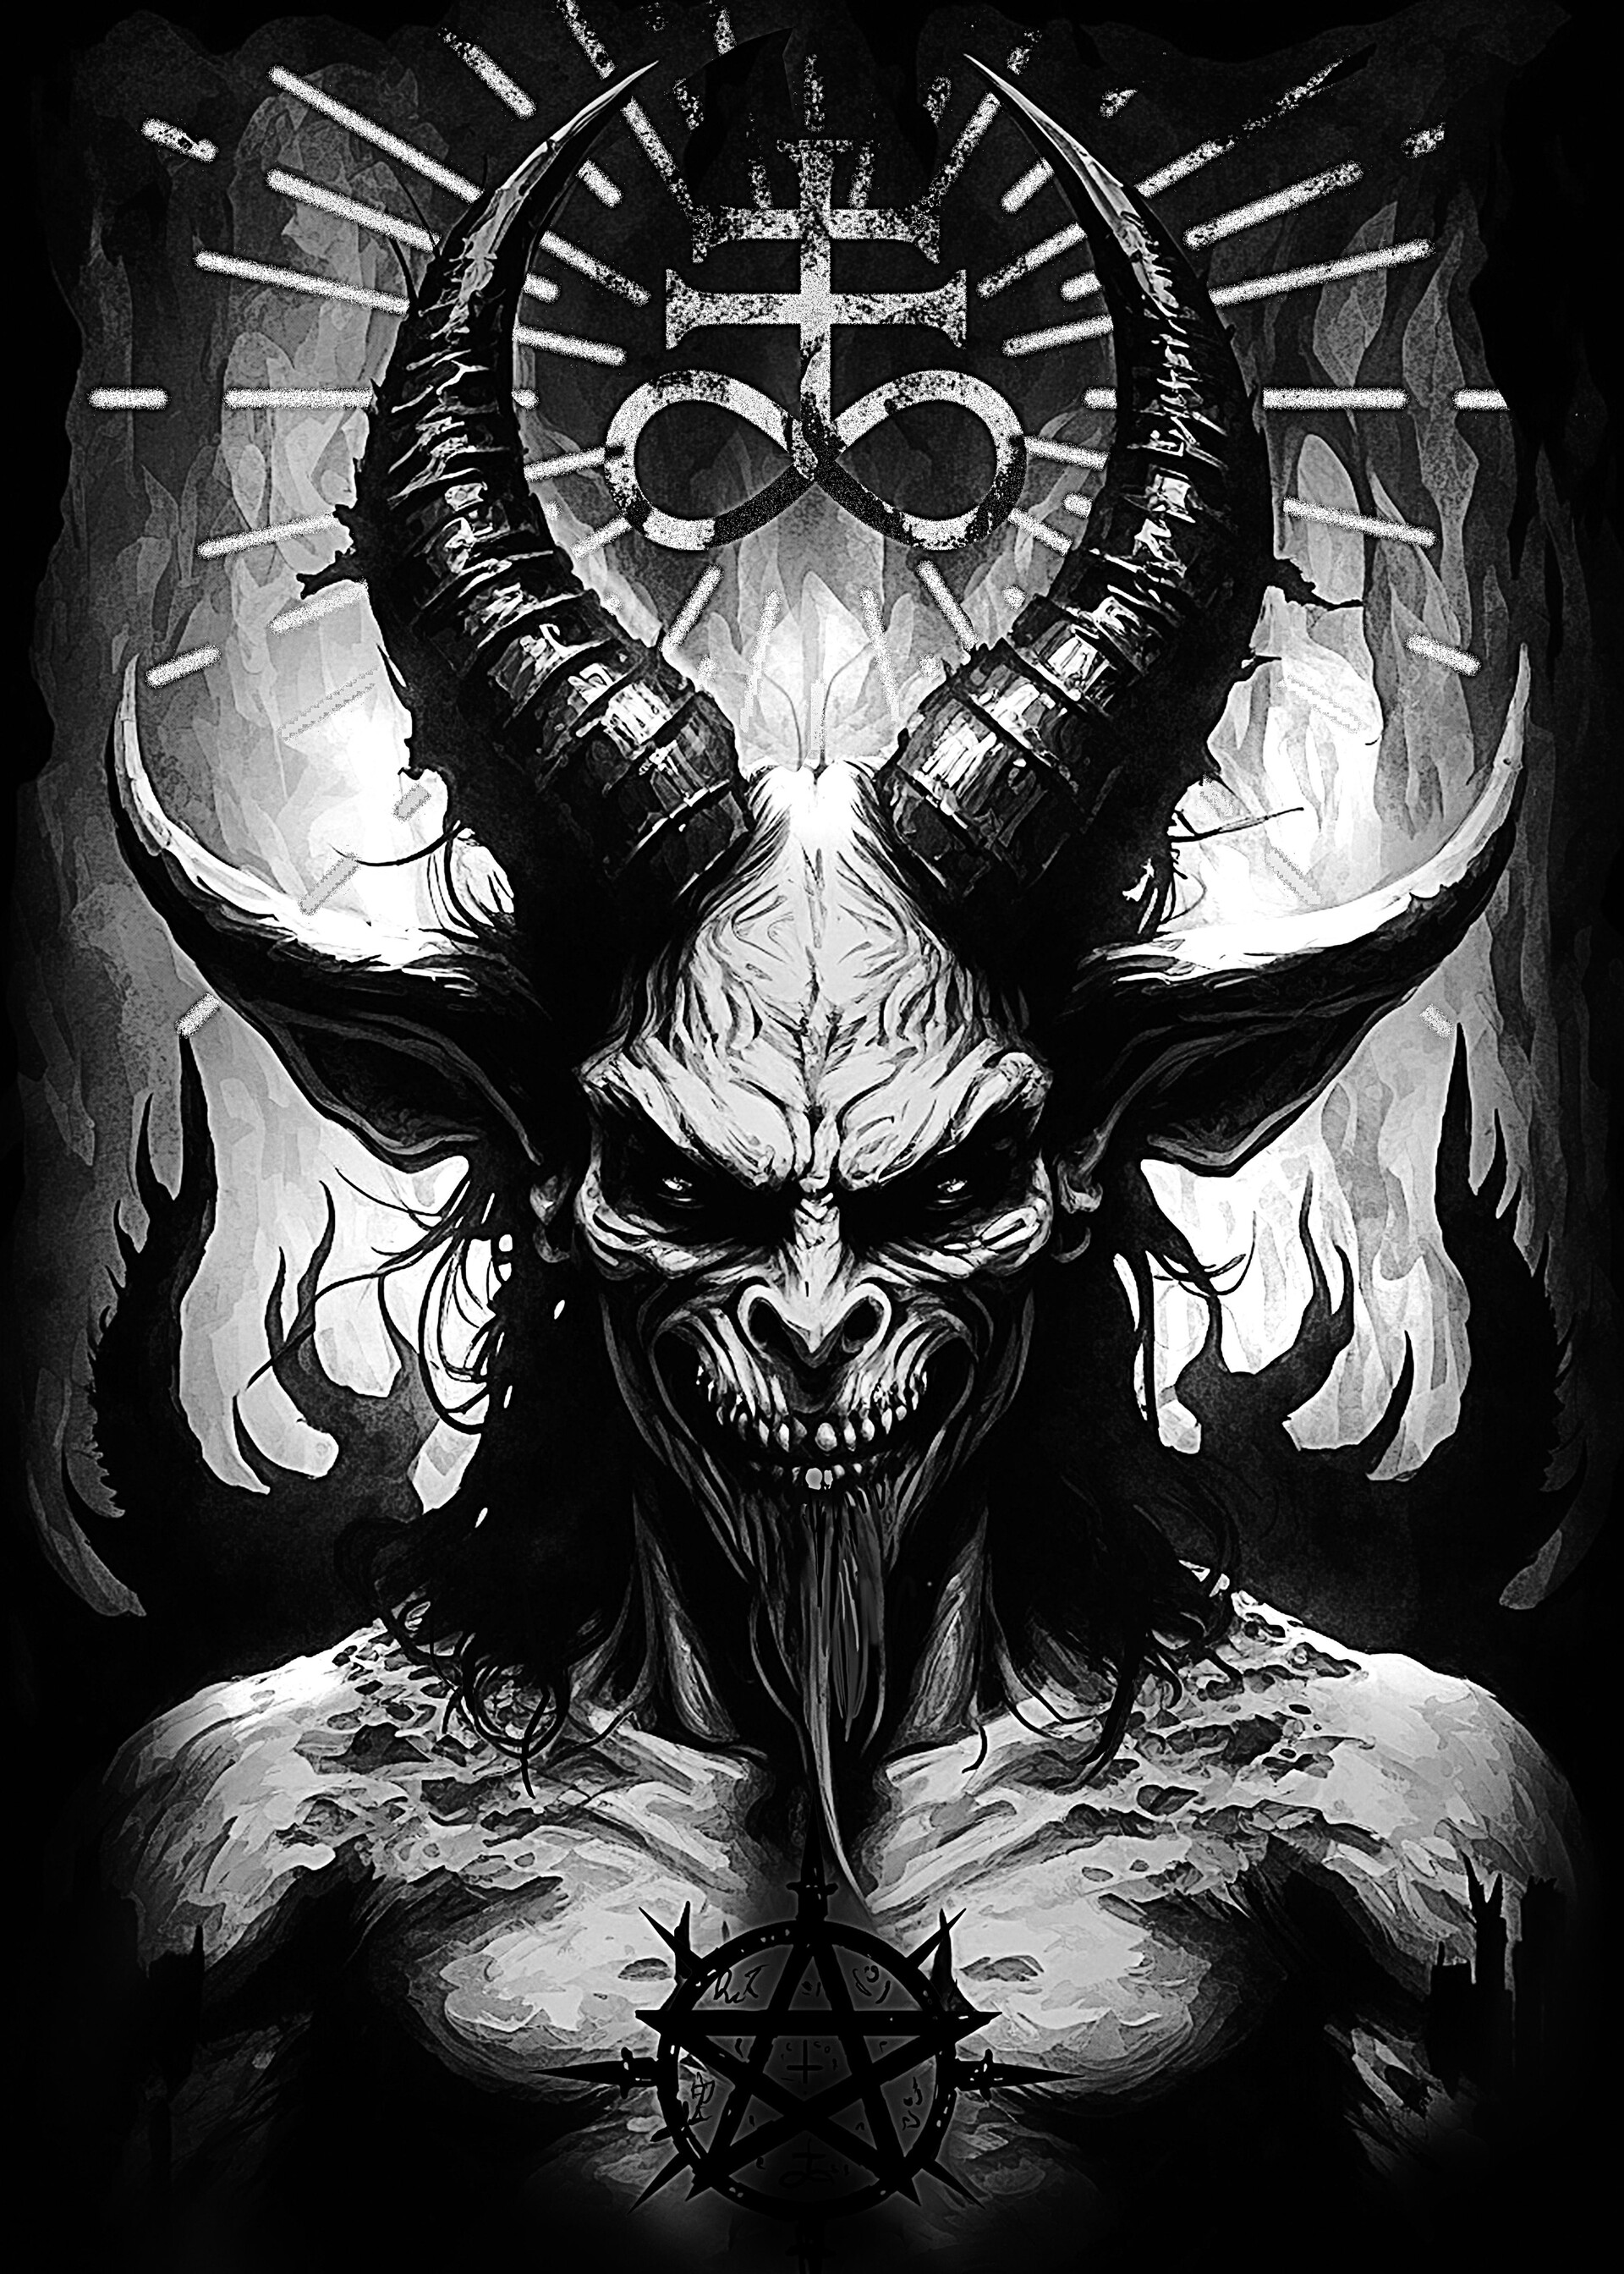 Lucifer 666